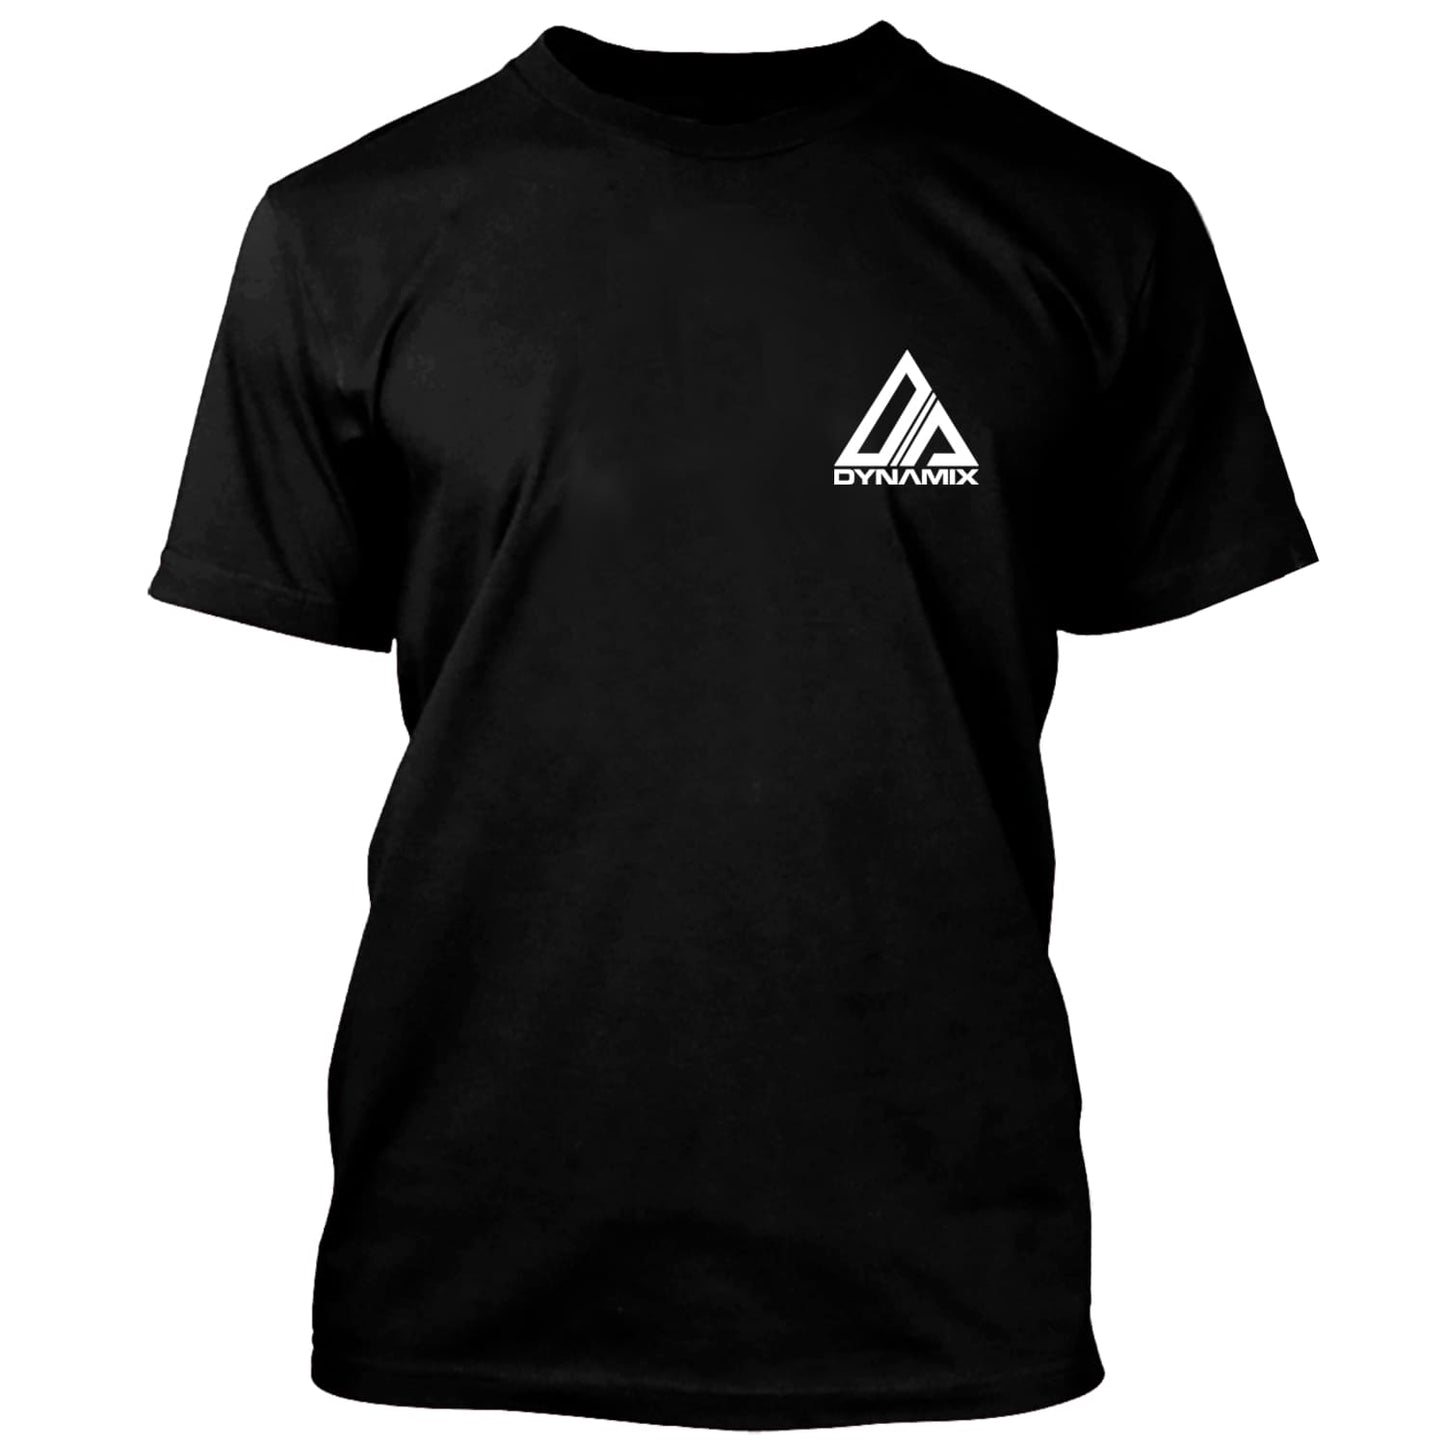 Dynamix Athletics T-Shirt Jiu Jitsu Submit - Schwarz